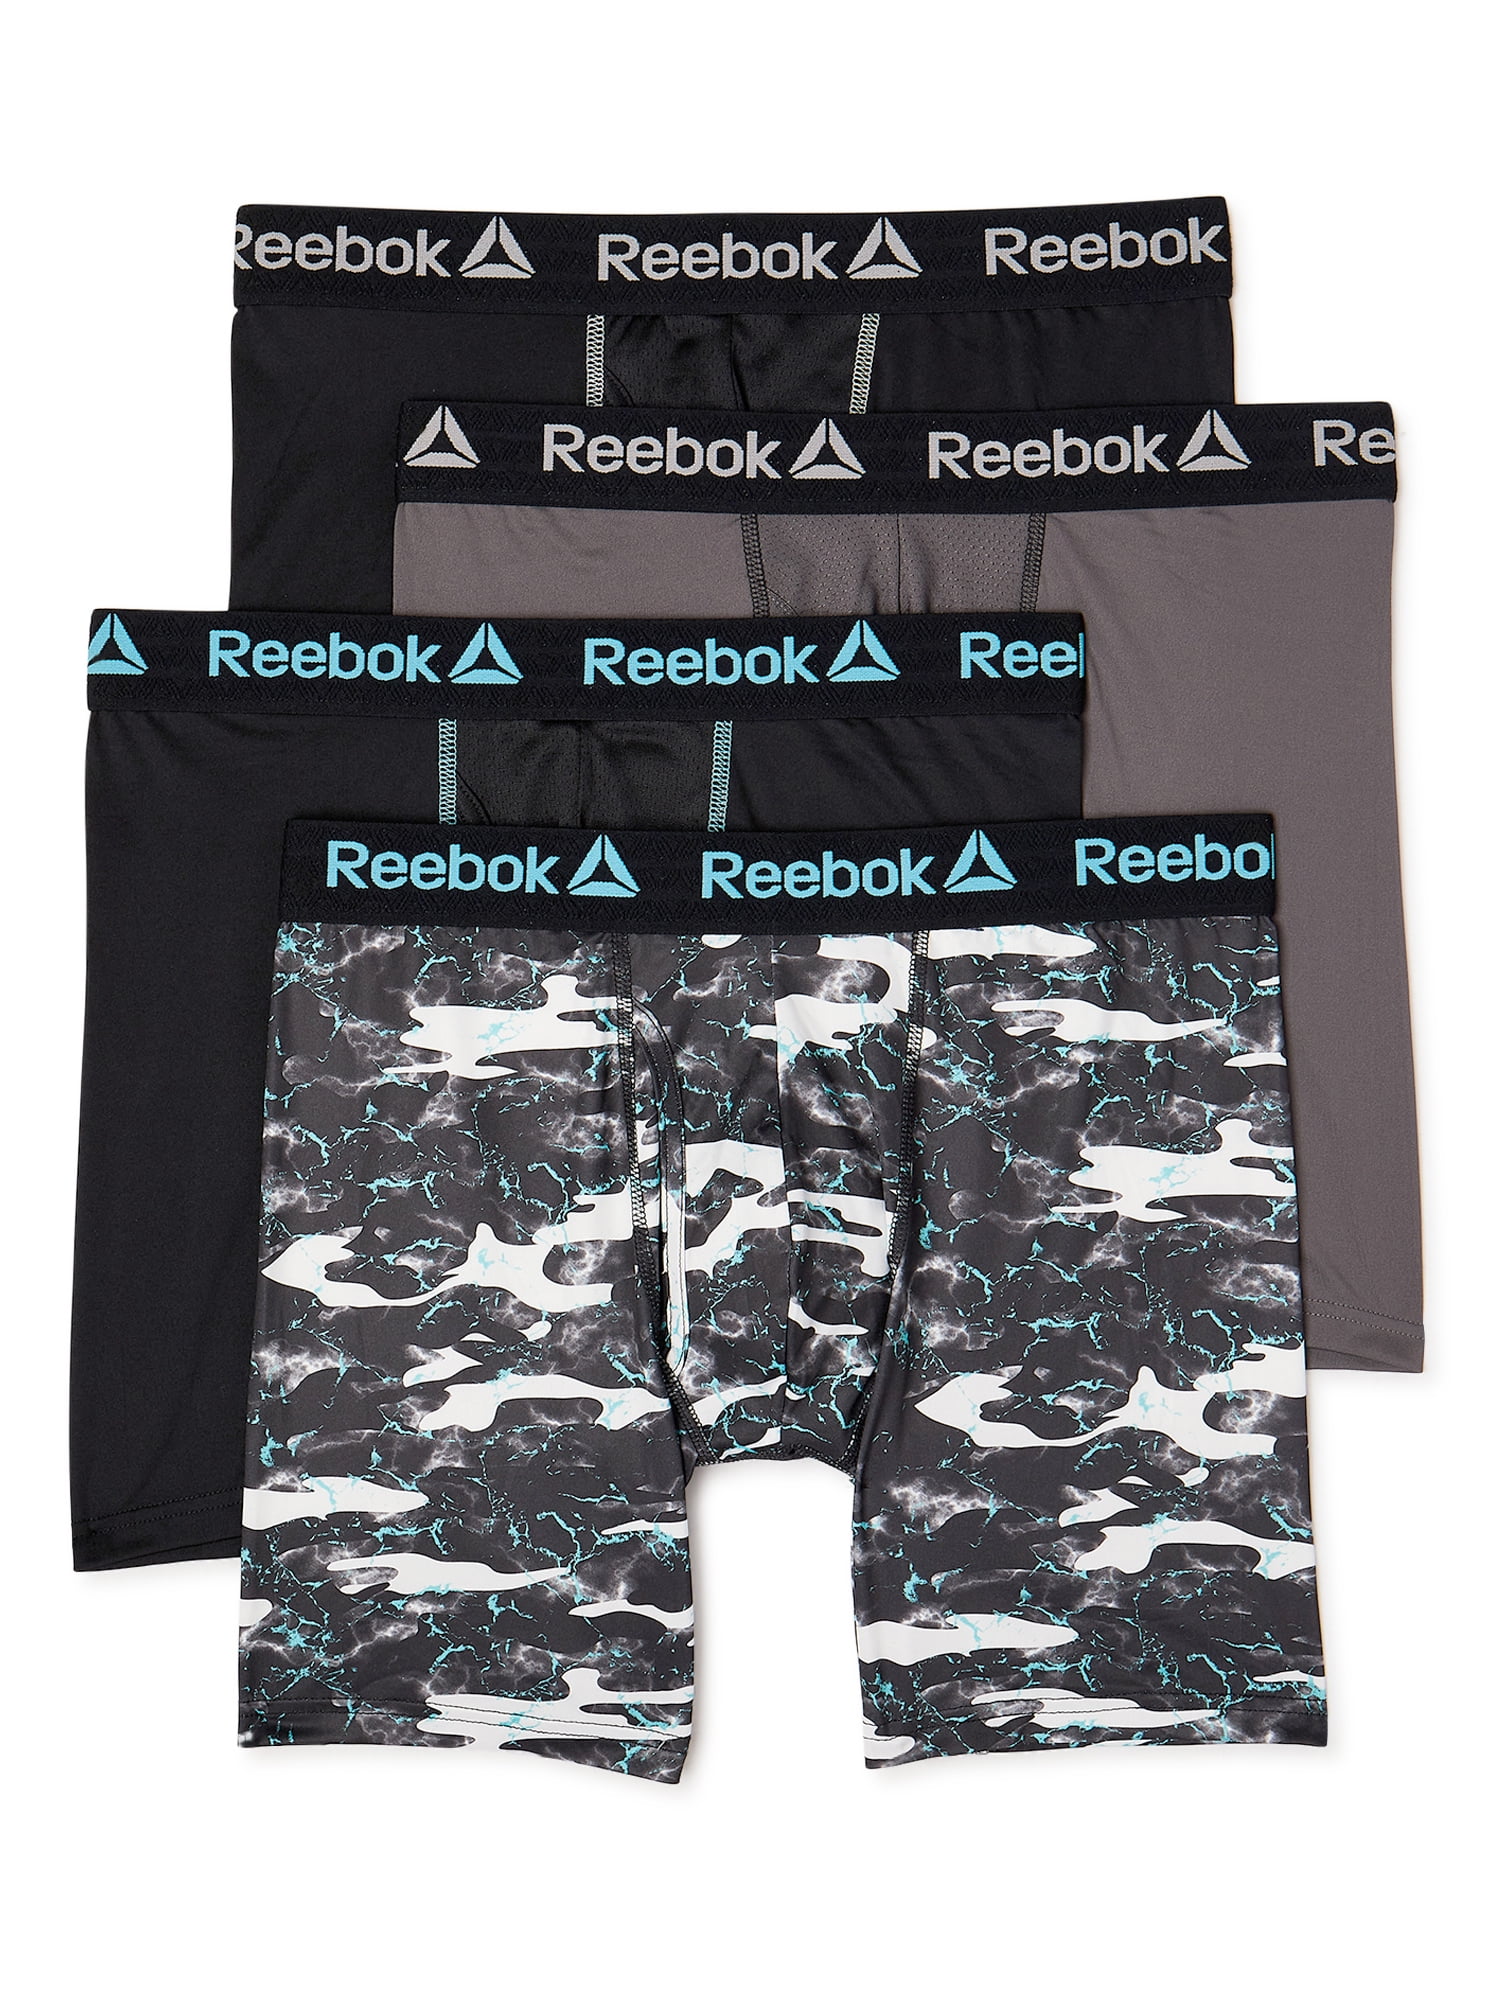 Reebok Men/'s Underwear Performance Boxer Briefs with Fly Pouch 4 Pack Blacks XL